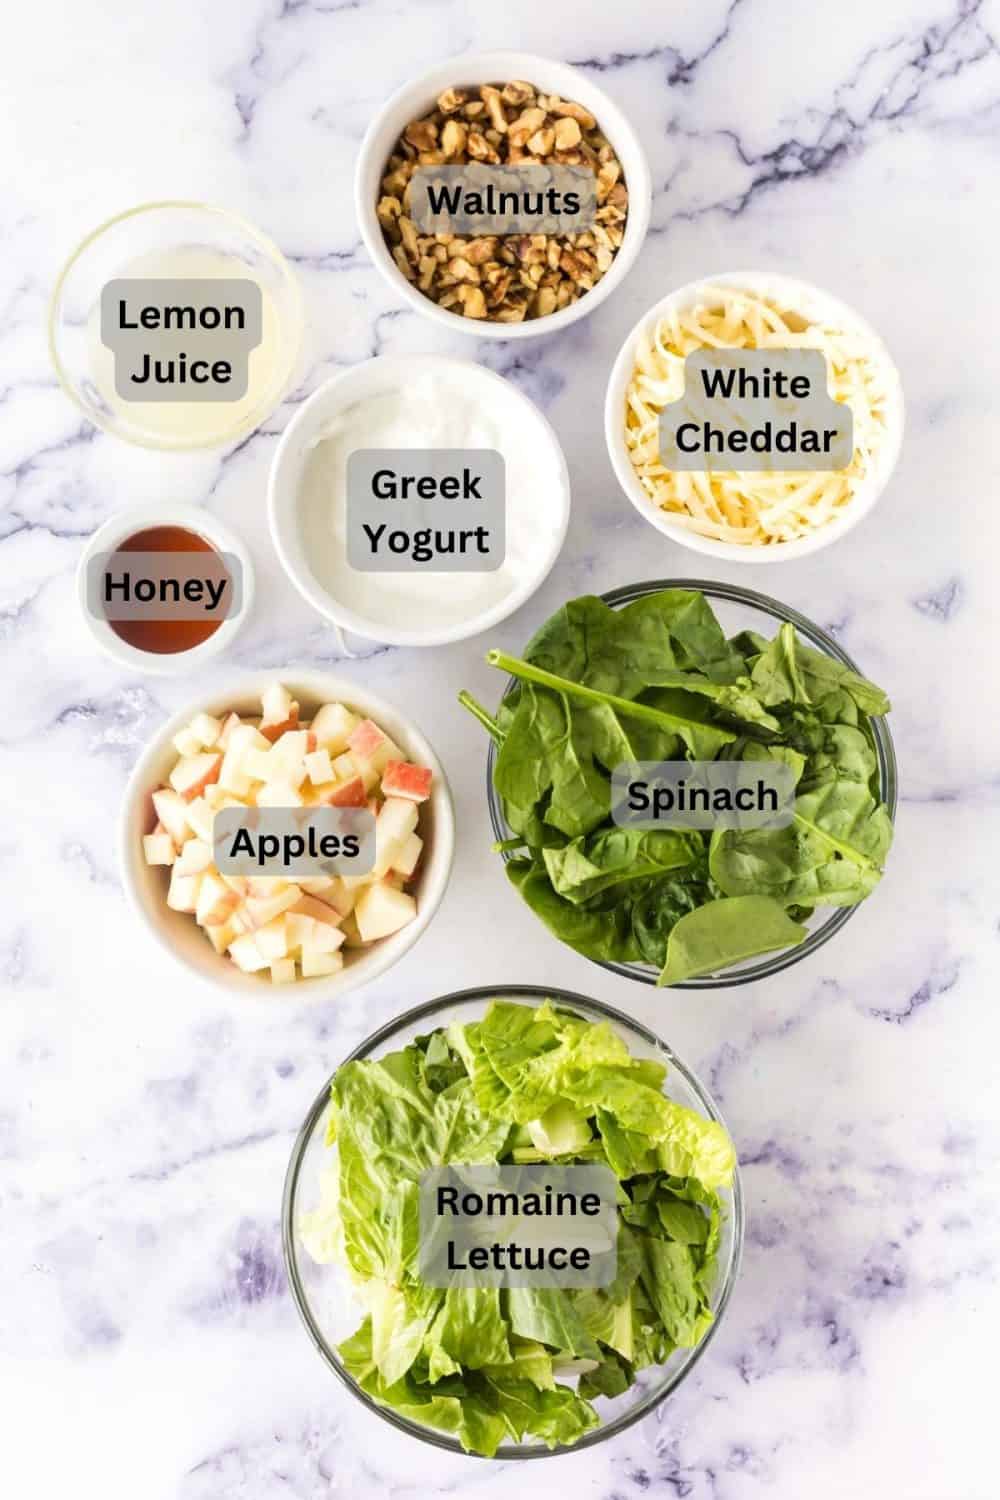 Labeled ingredients for apple salad.